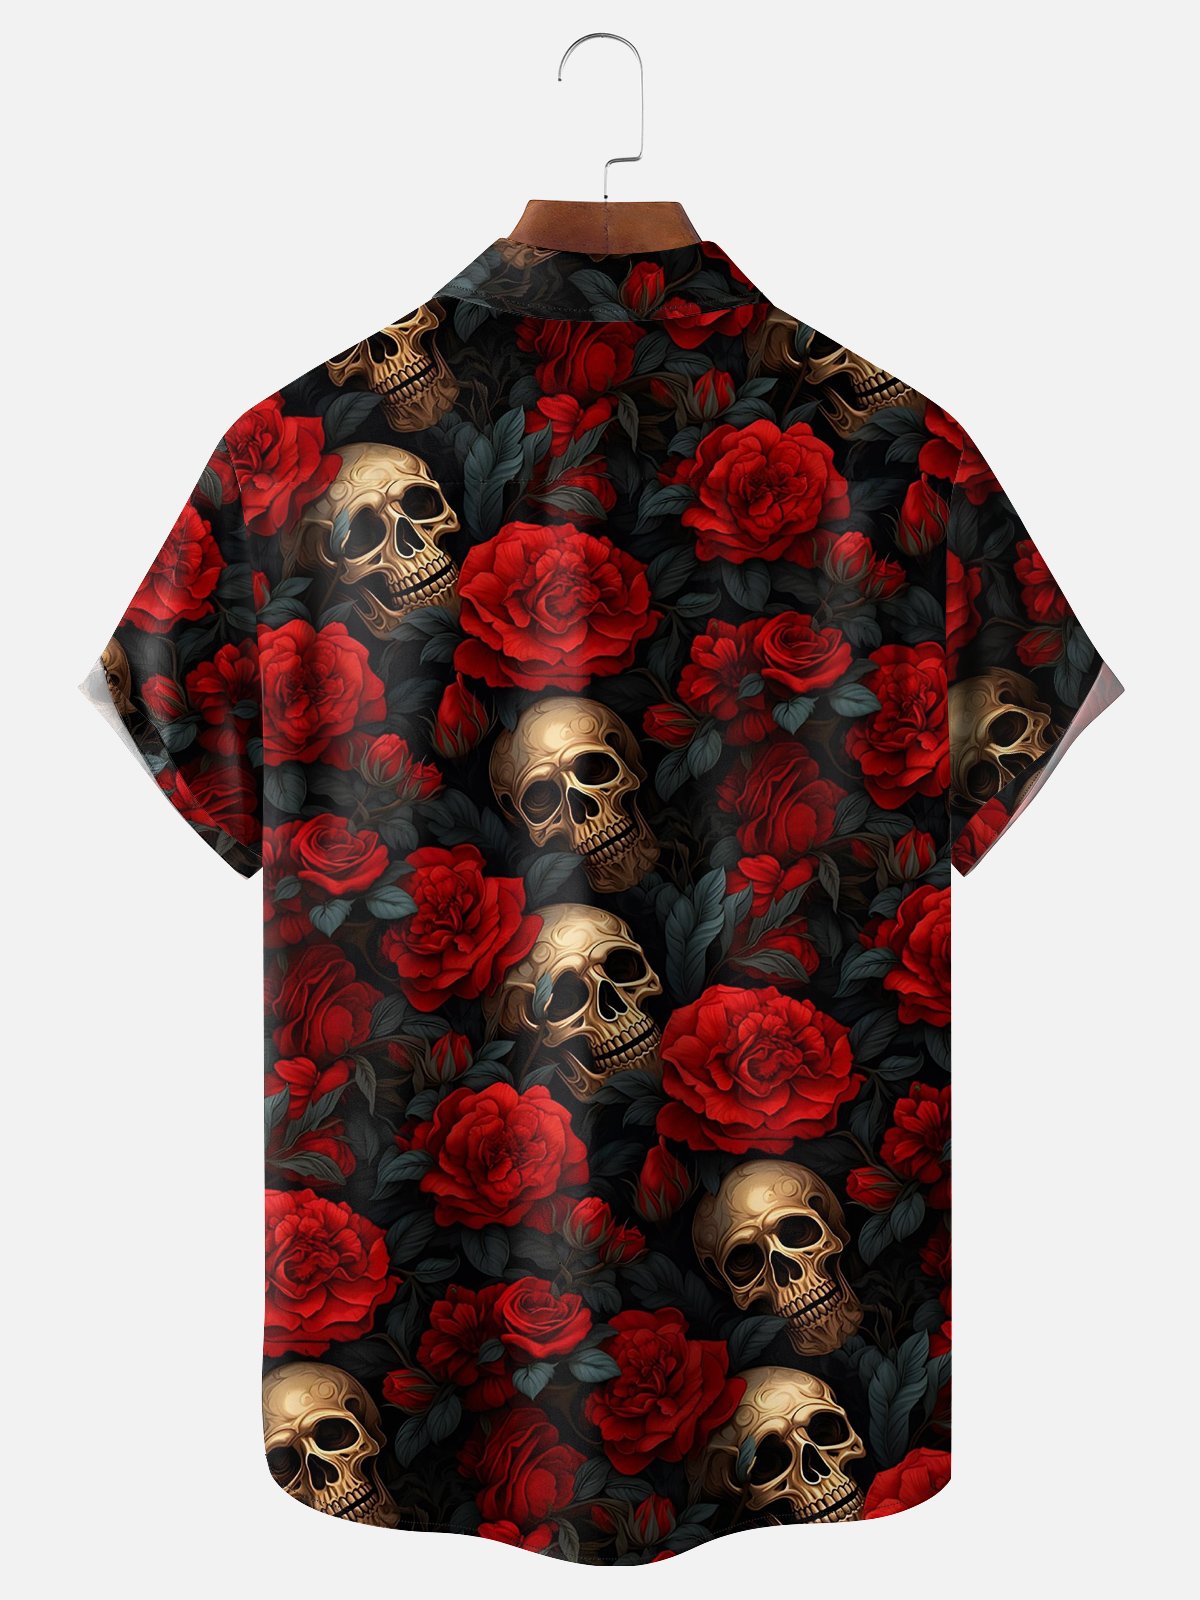 Hardaddy Moisture-wicking Rock Music Skull Drop Rose Chest Pocket Hawaiian Shirt